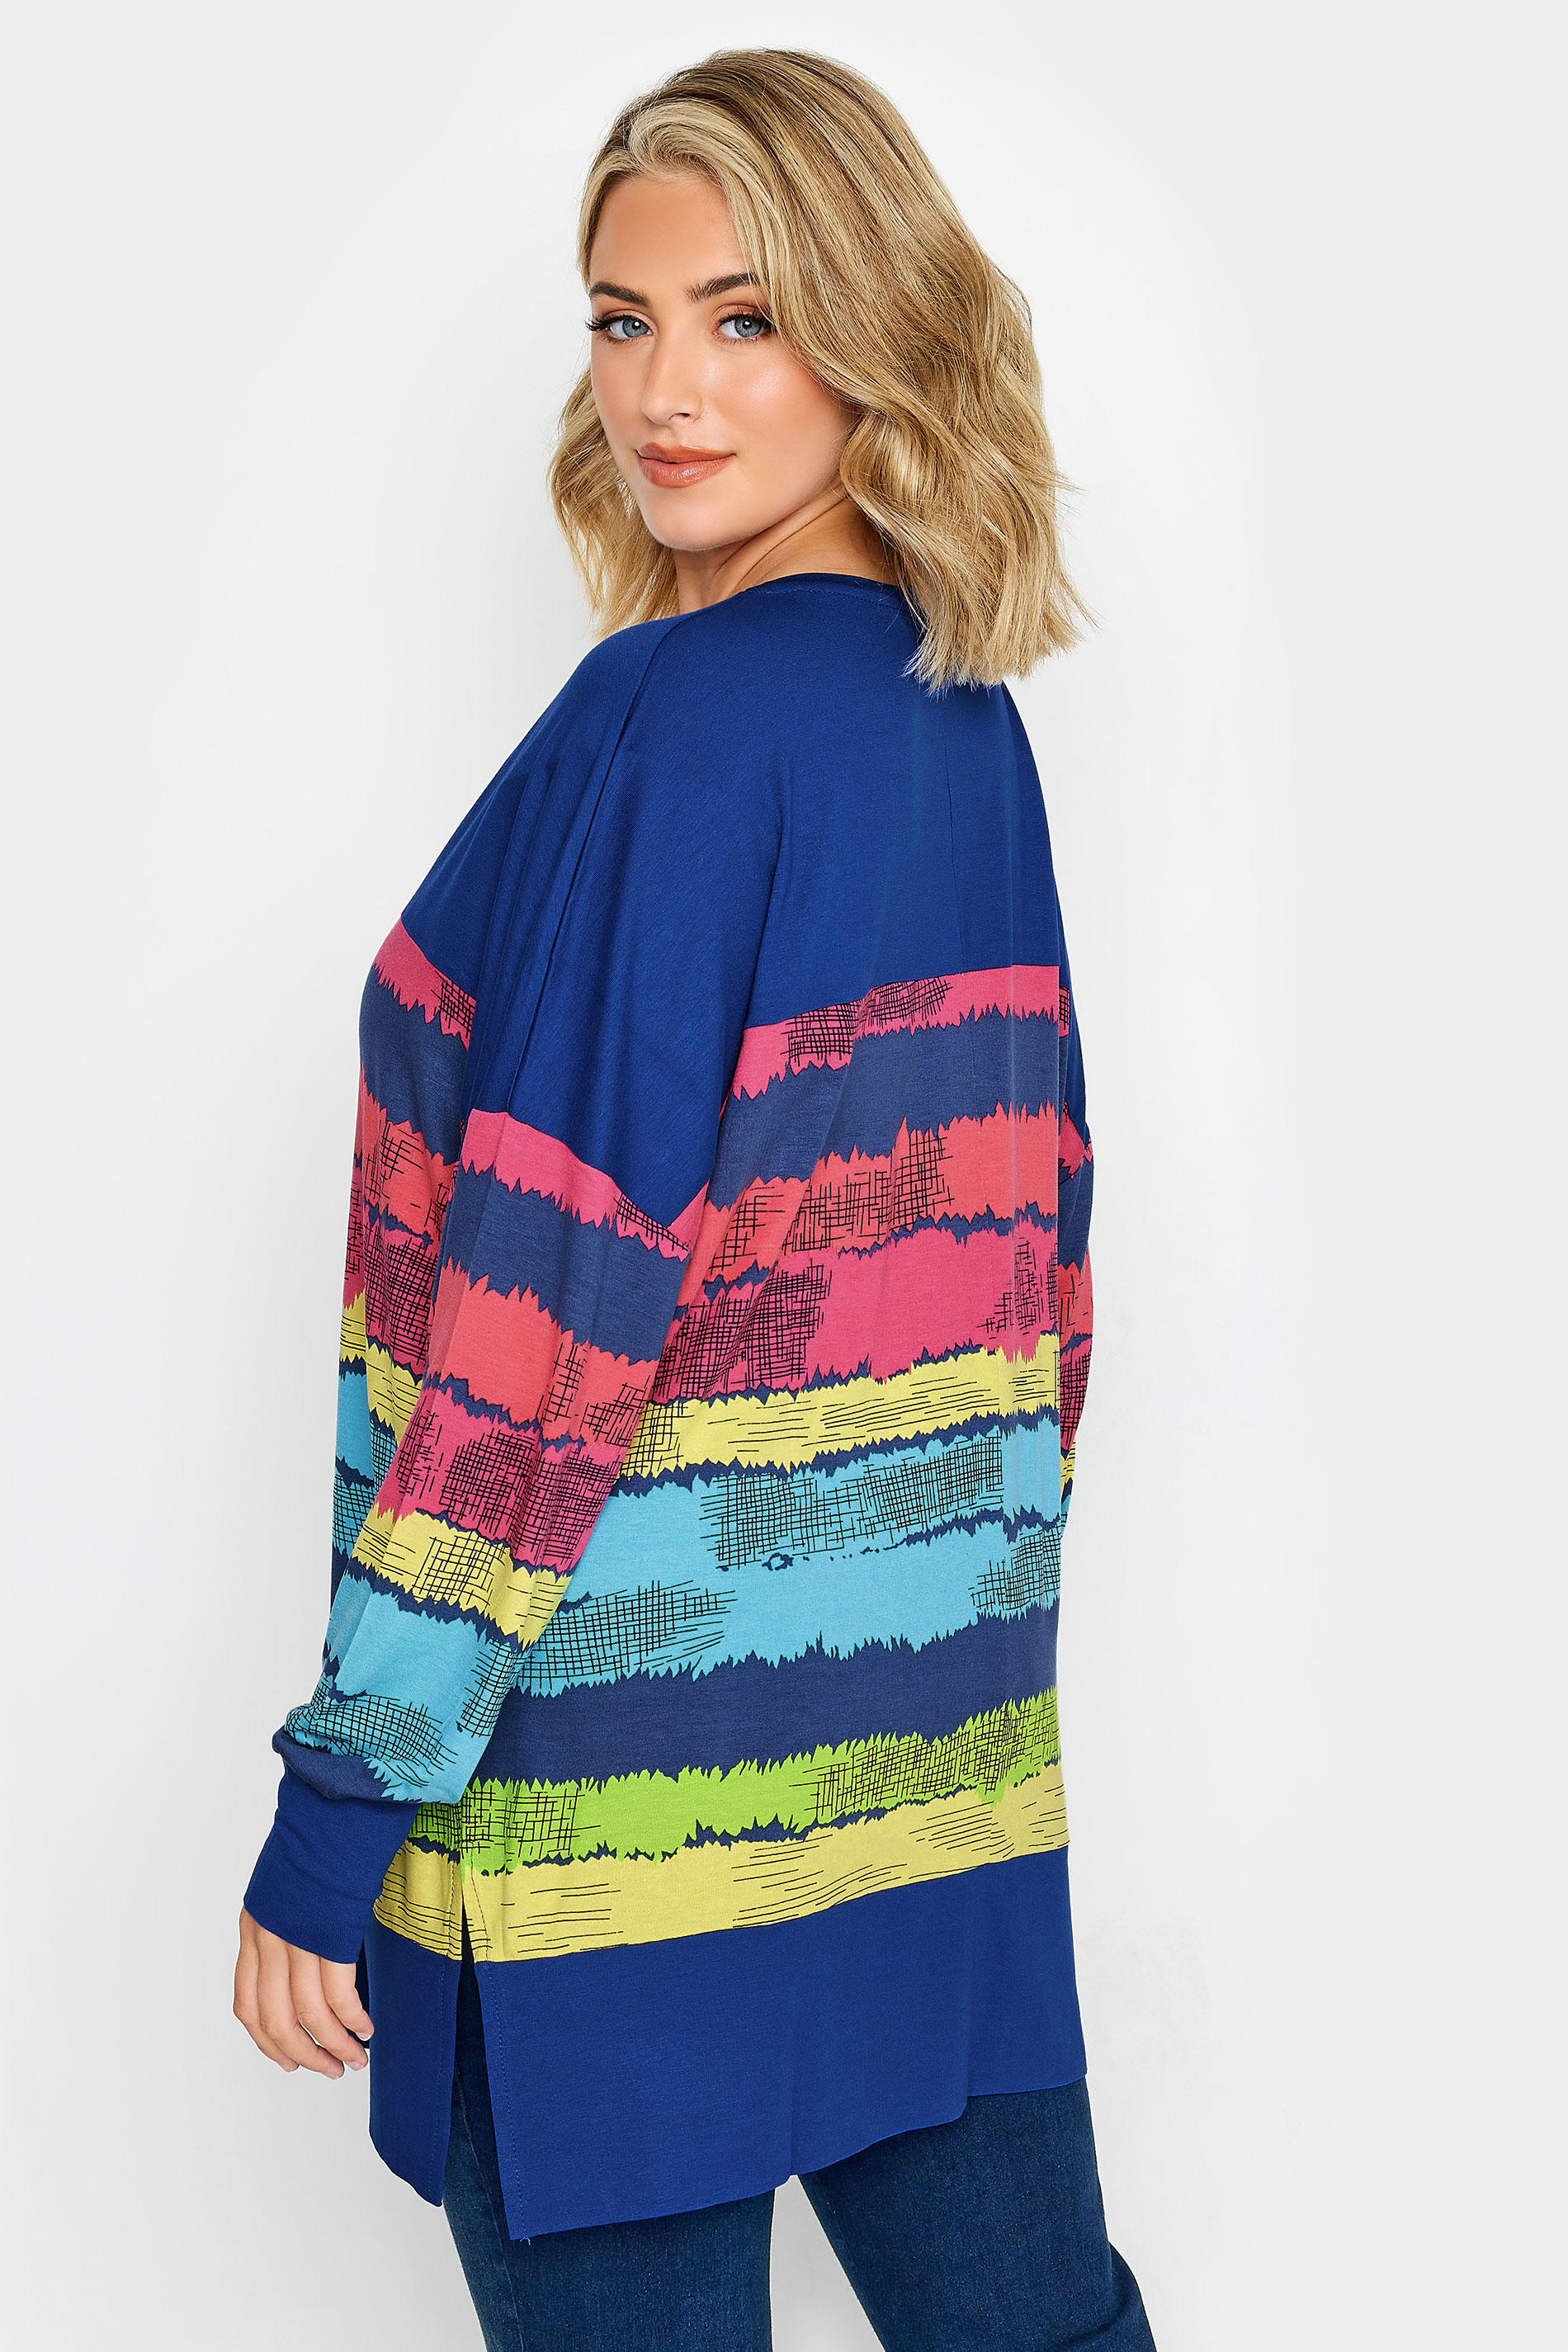 Yours Curve Women's Plus Size Stripe Print Top | eBay